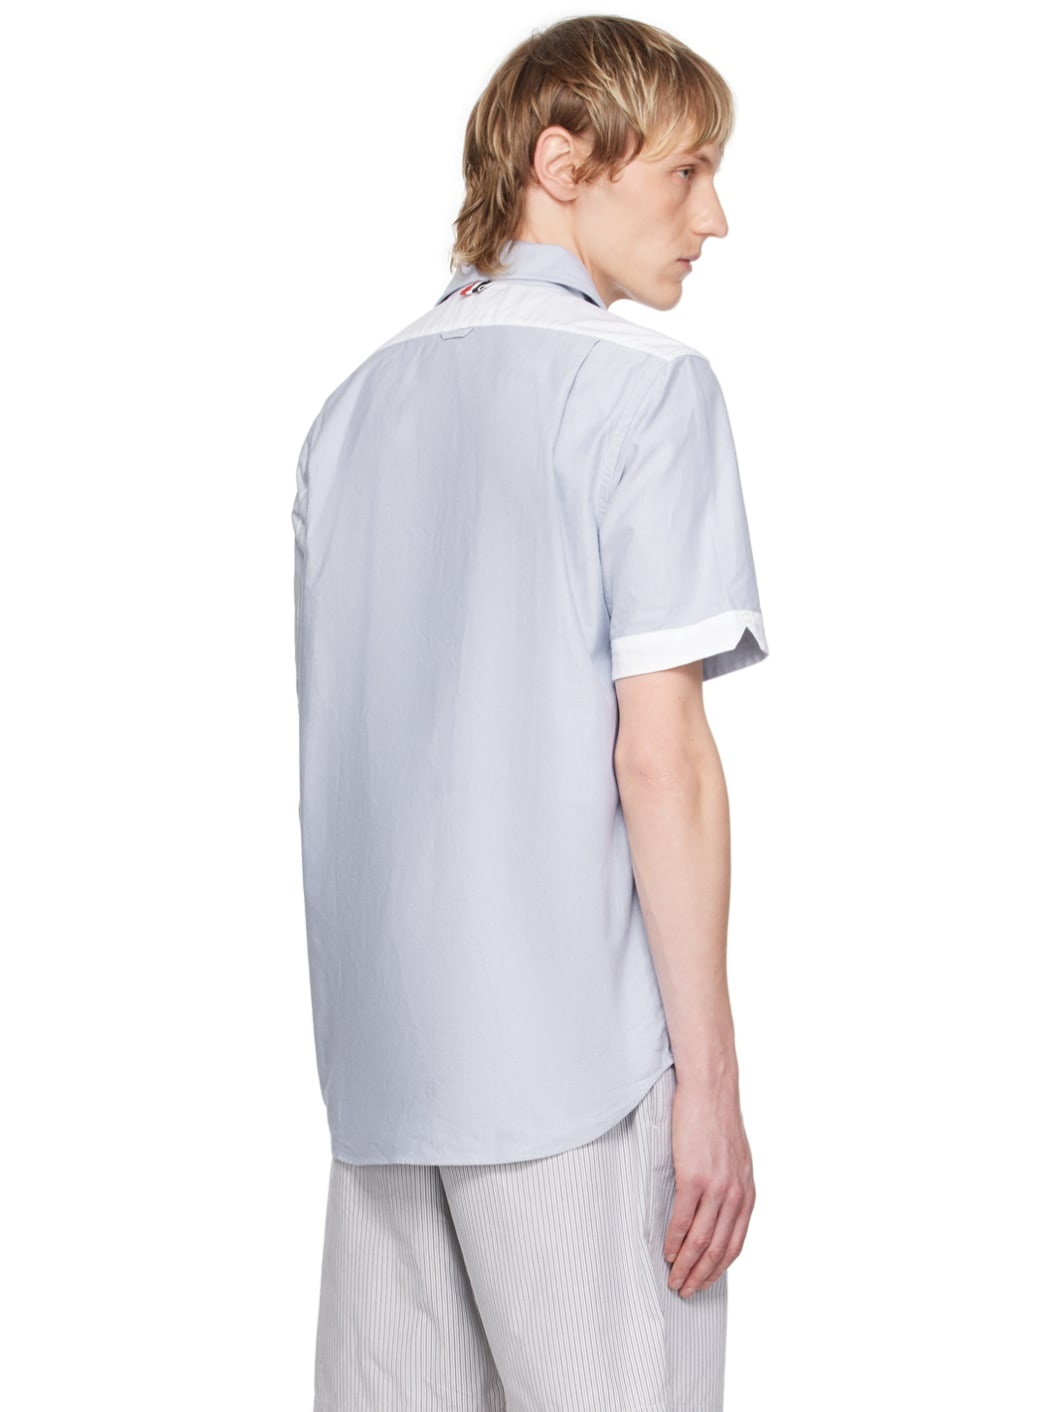 White & Blue Stripe Shirt - 3